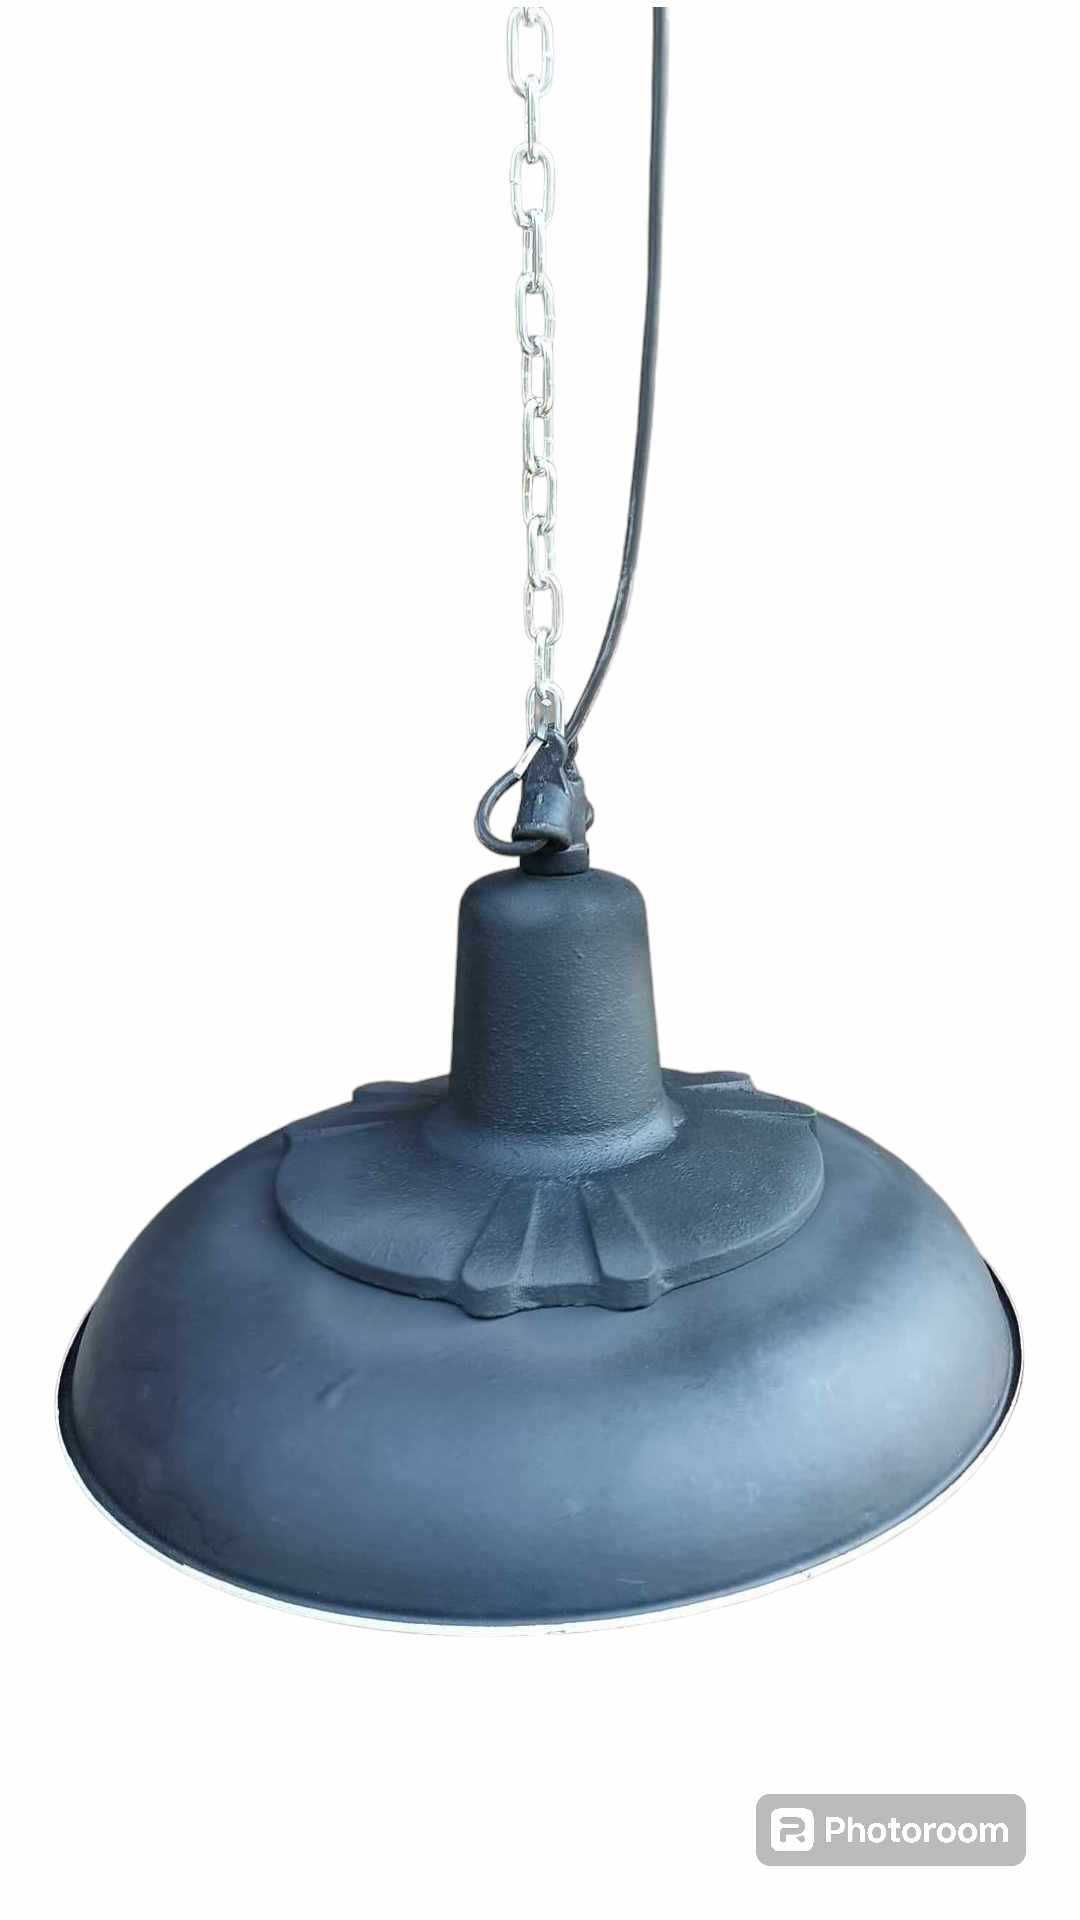 Lampa industrialna OZż-1 z lat 60' kat. 12010